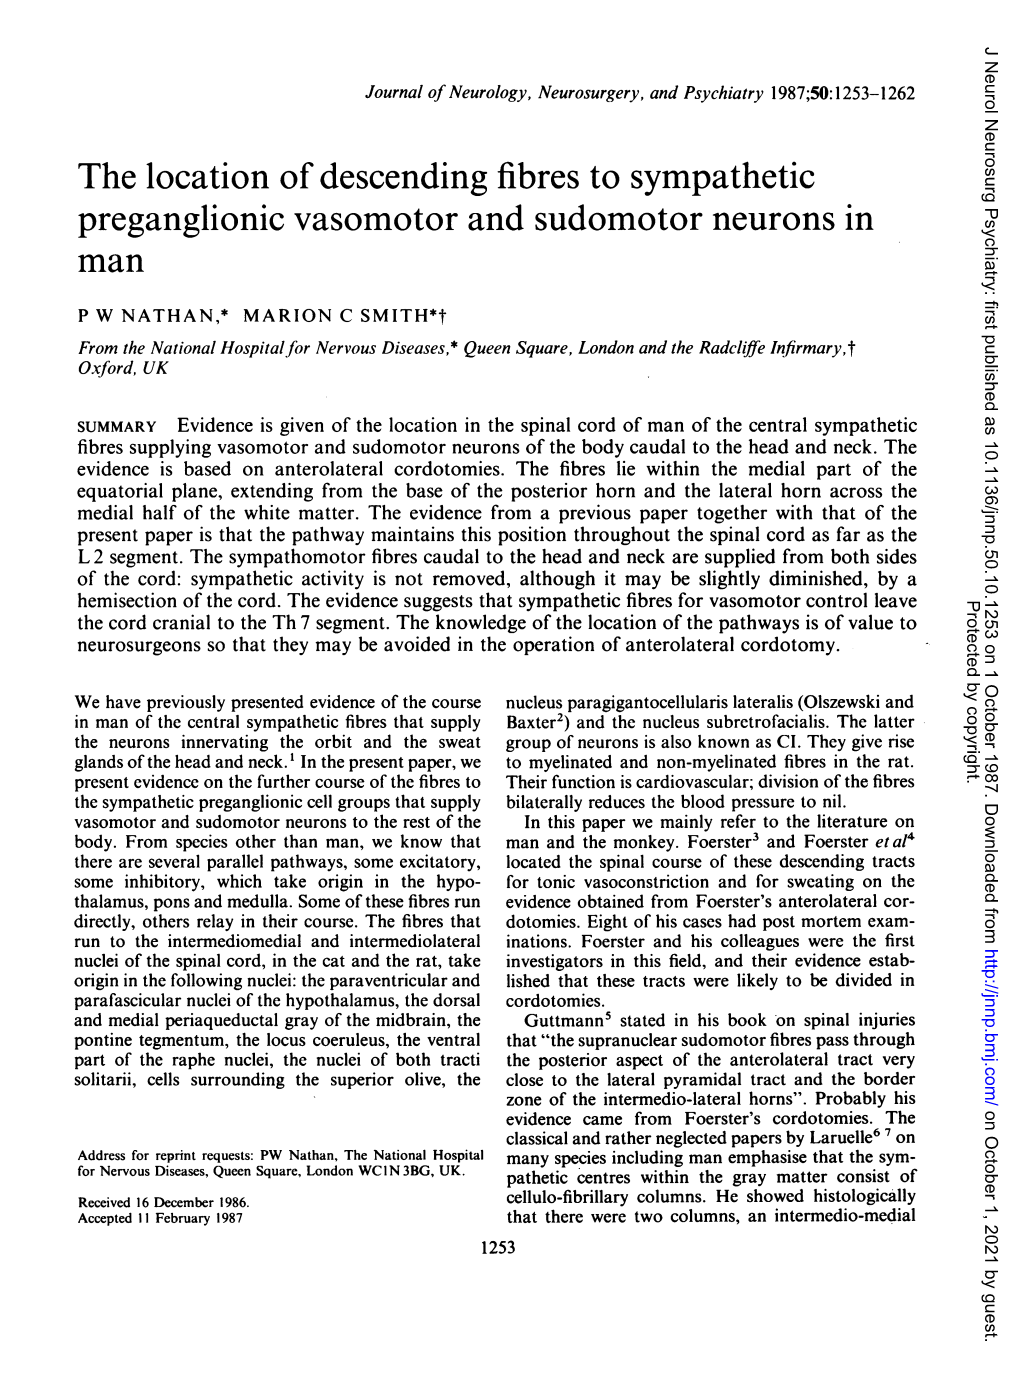 The Location of Descending Fibres to Sympathetic Preganglionic Vasomotor and Sudomotor Neurons in Man